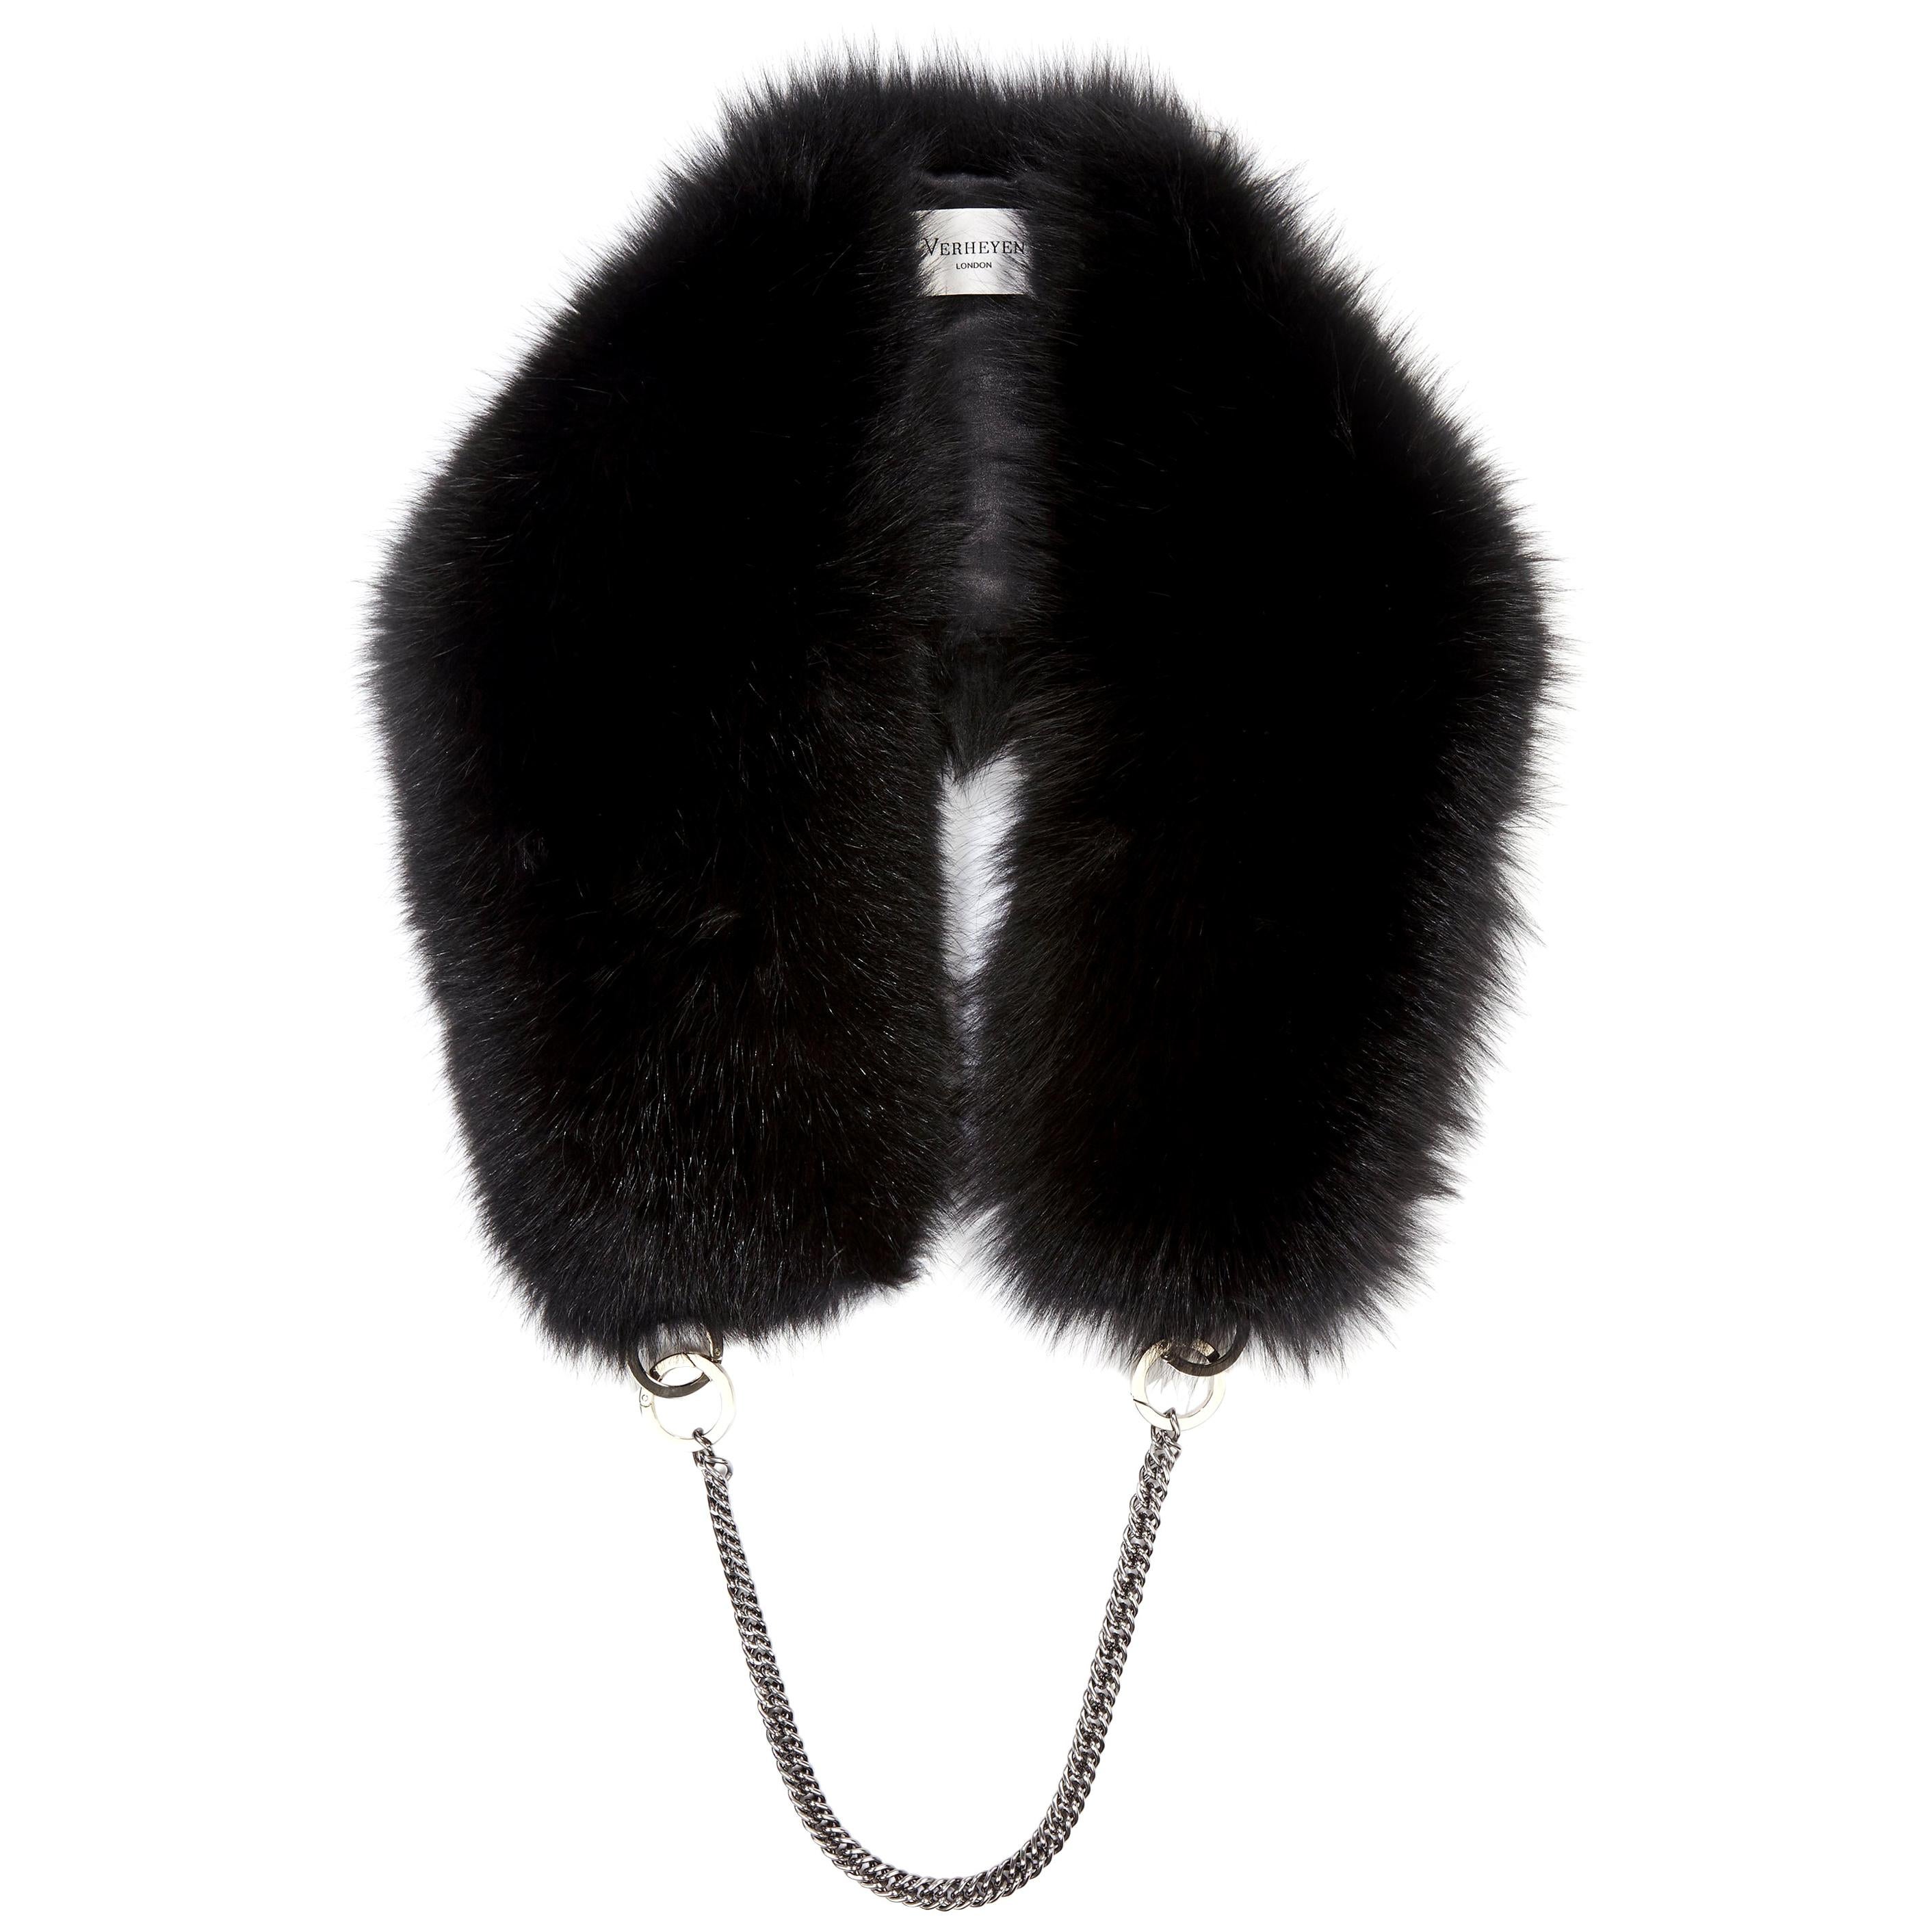 Verheyen London Chained Stole in Black Fox Fur & Silk Lining with Chain